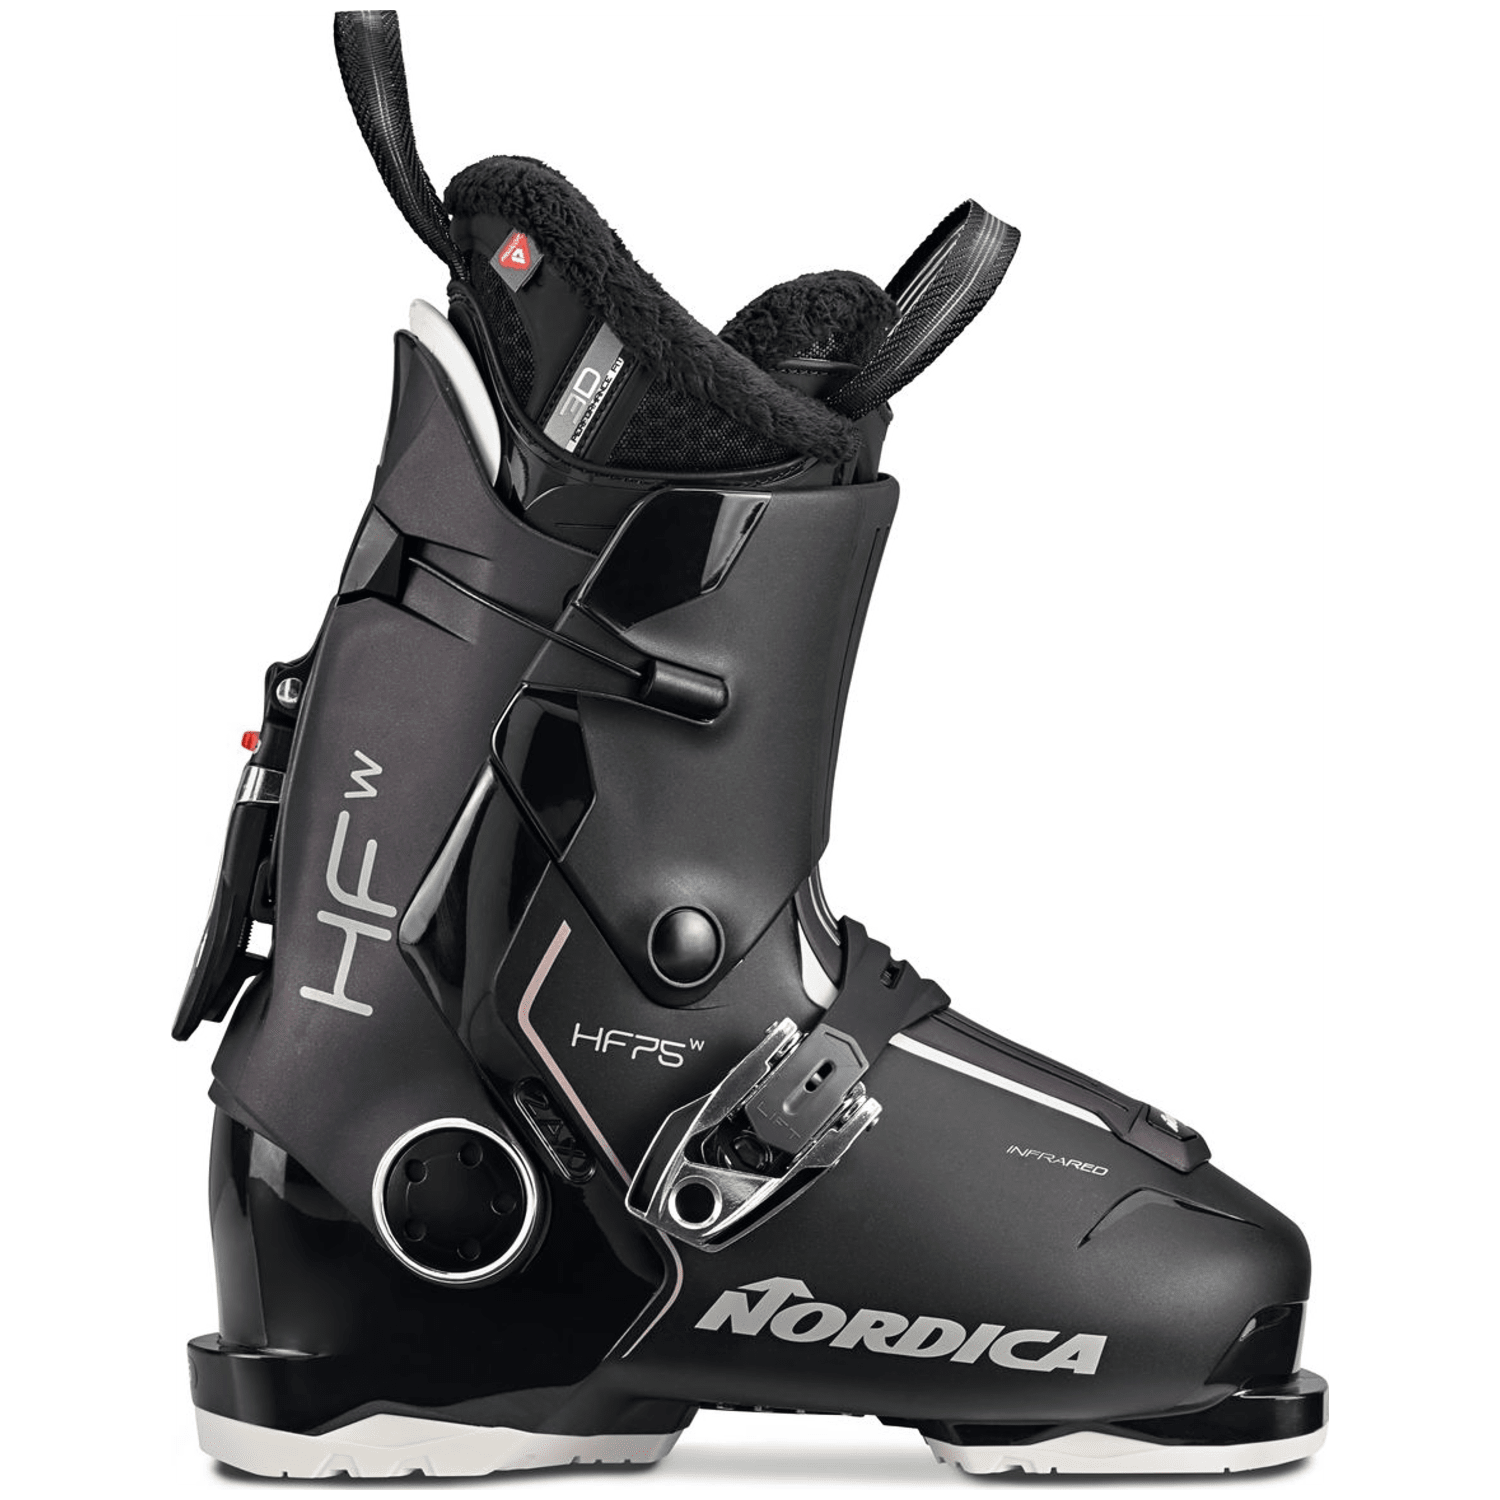 Nordica Hf 75 W Ski Alpin Schuh